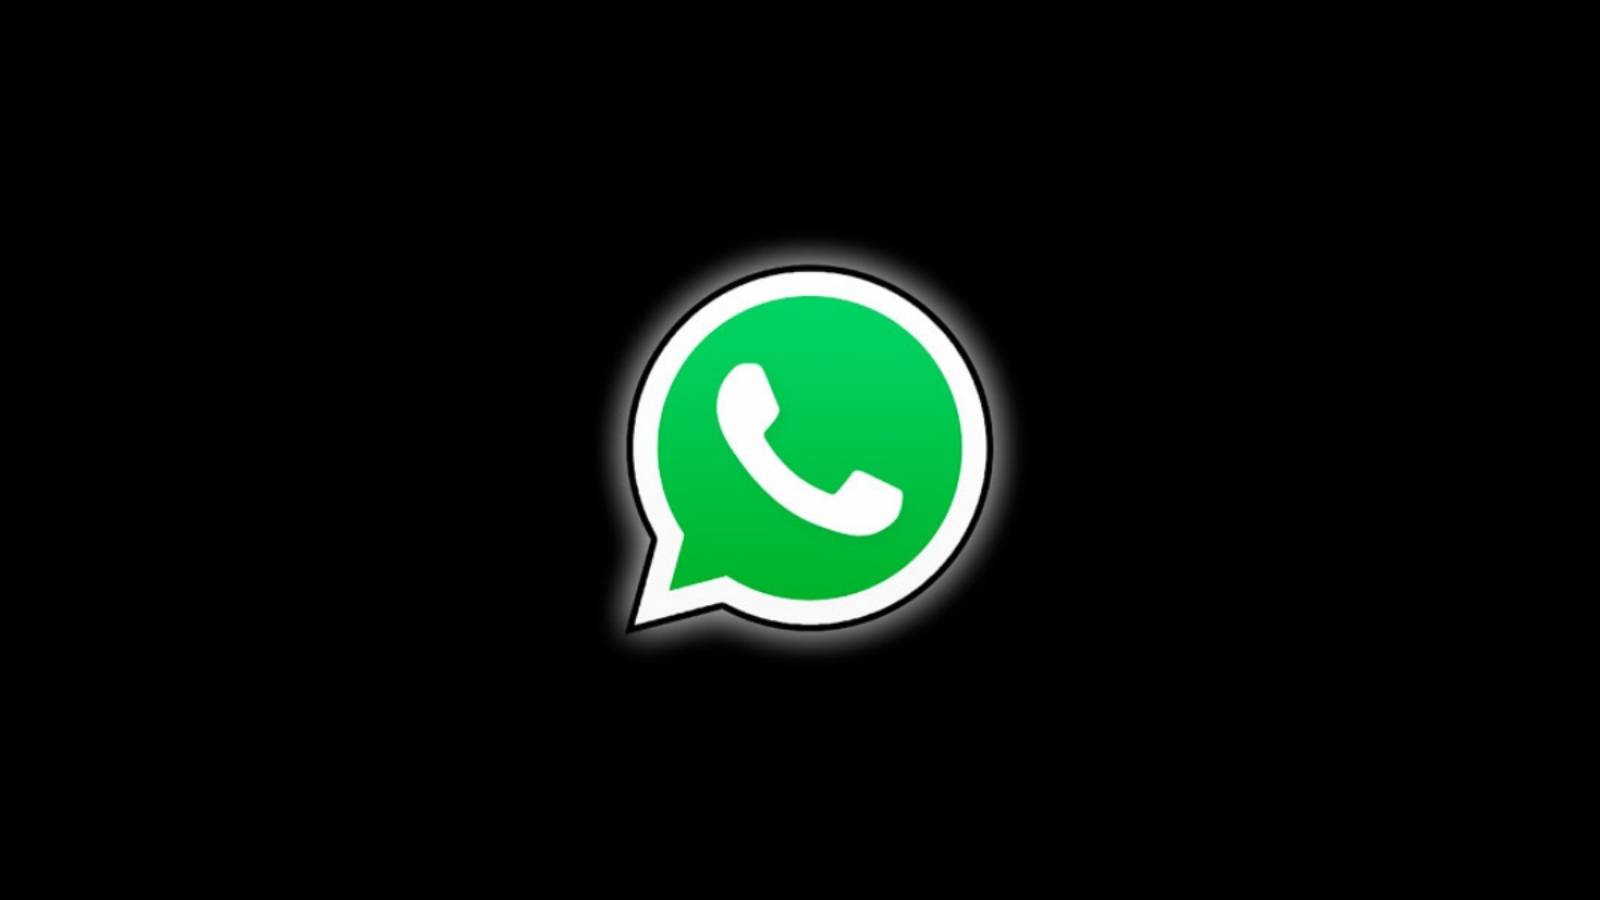 Funkcje aplikacji WhatsApp